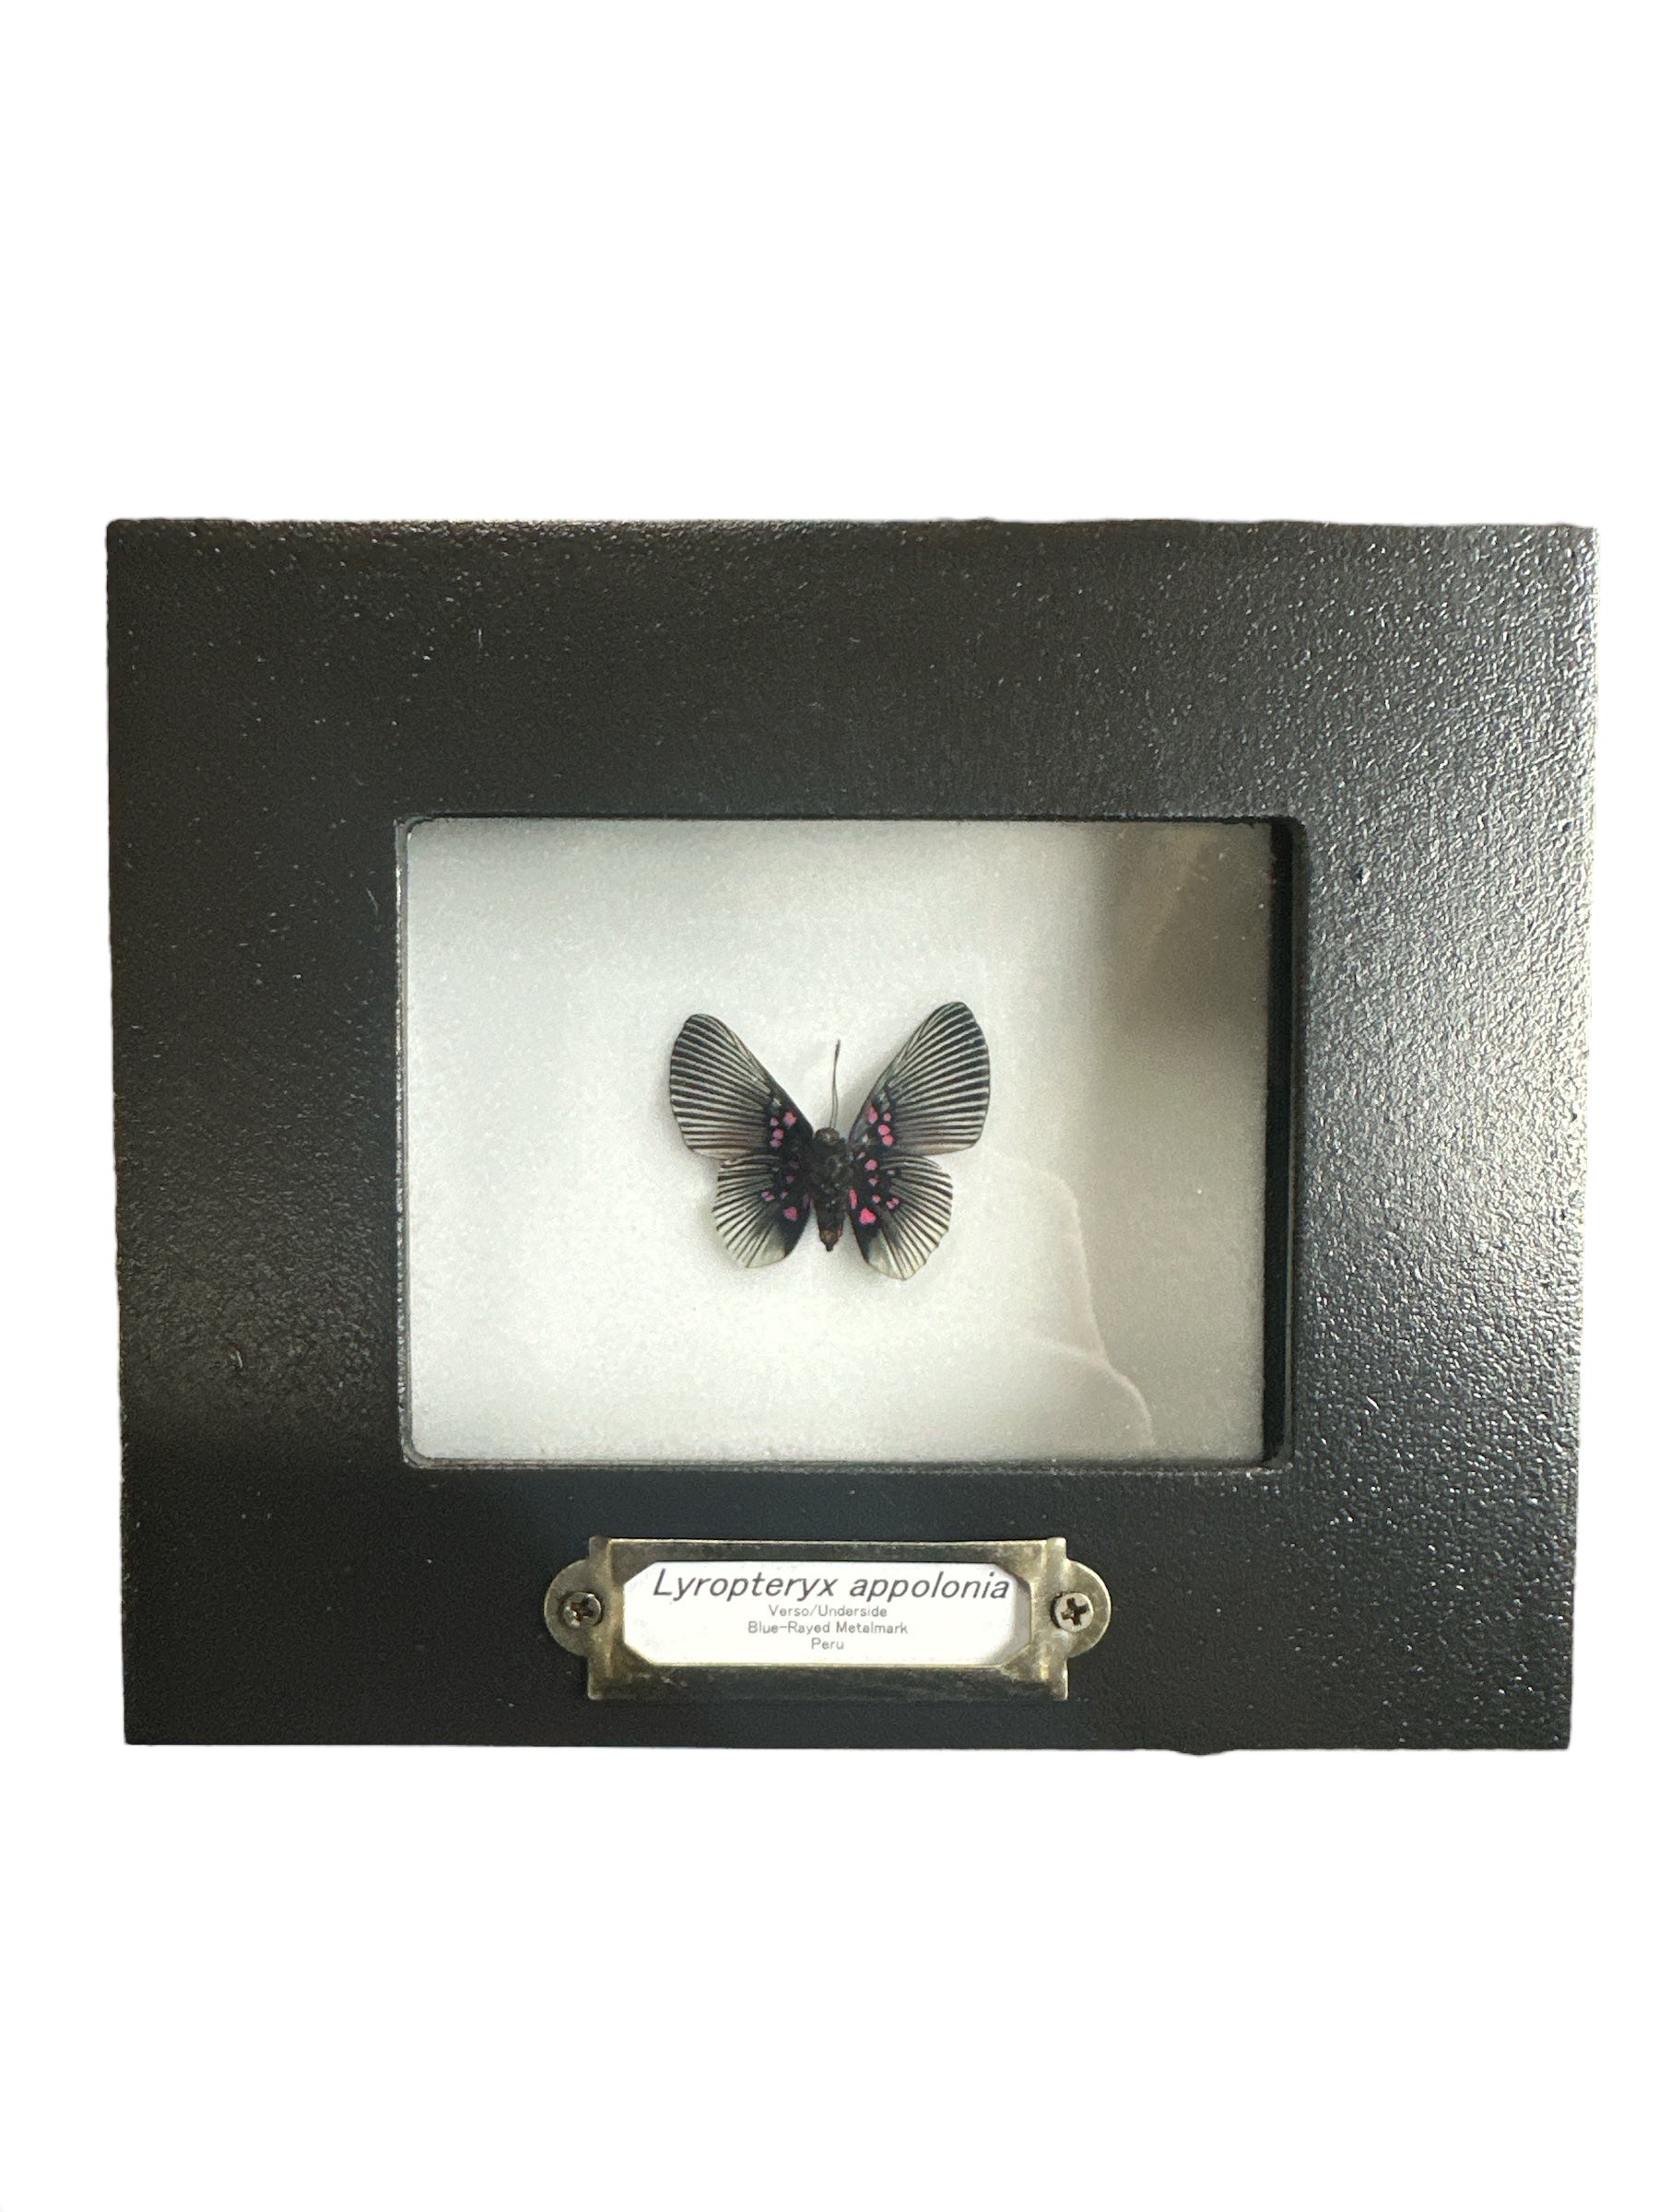 Apollo Metalmark Butterfly - Underside (Lyropteryx appolonia) - 2x3" Frame